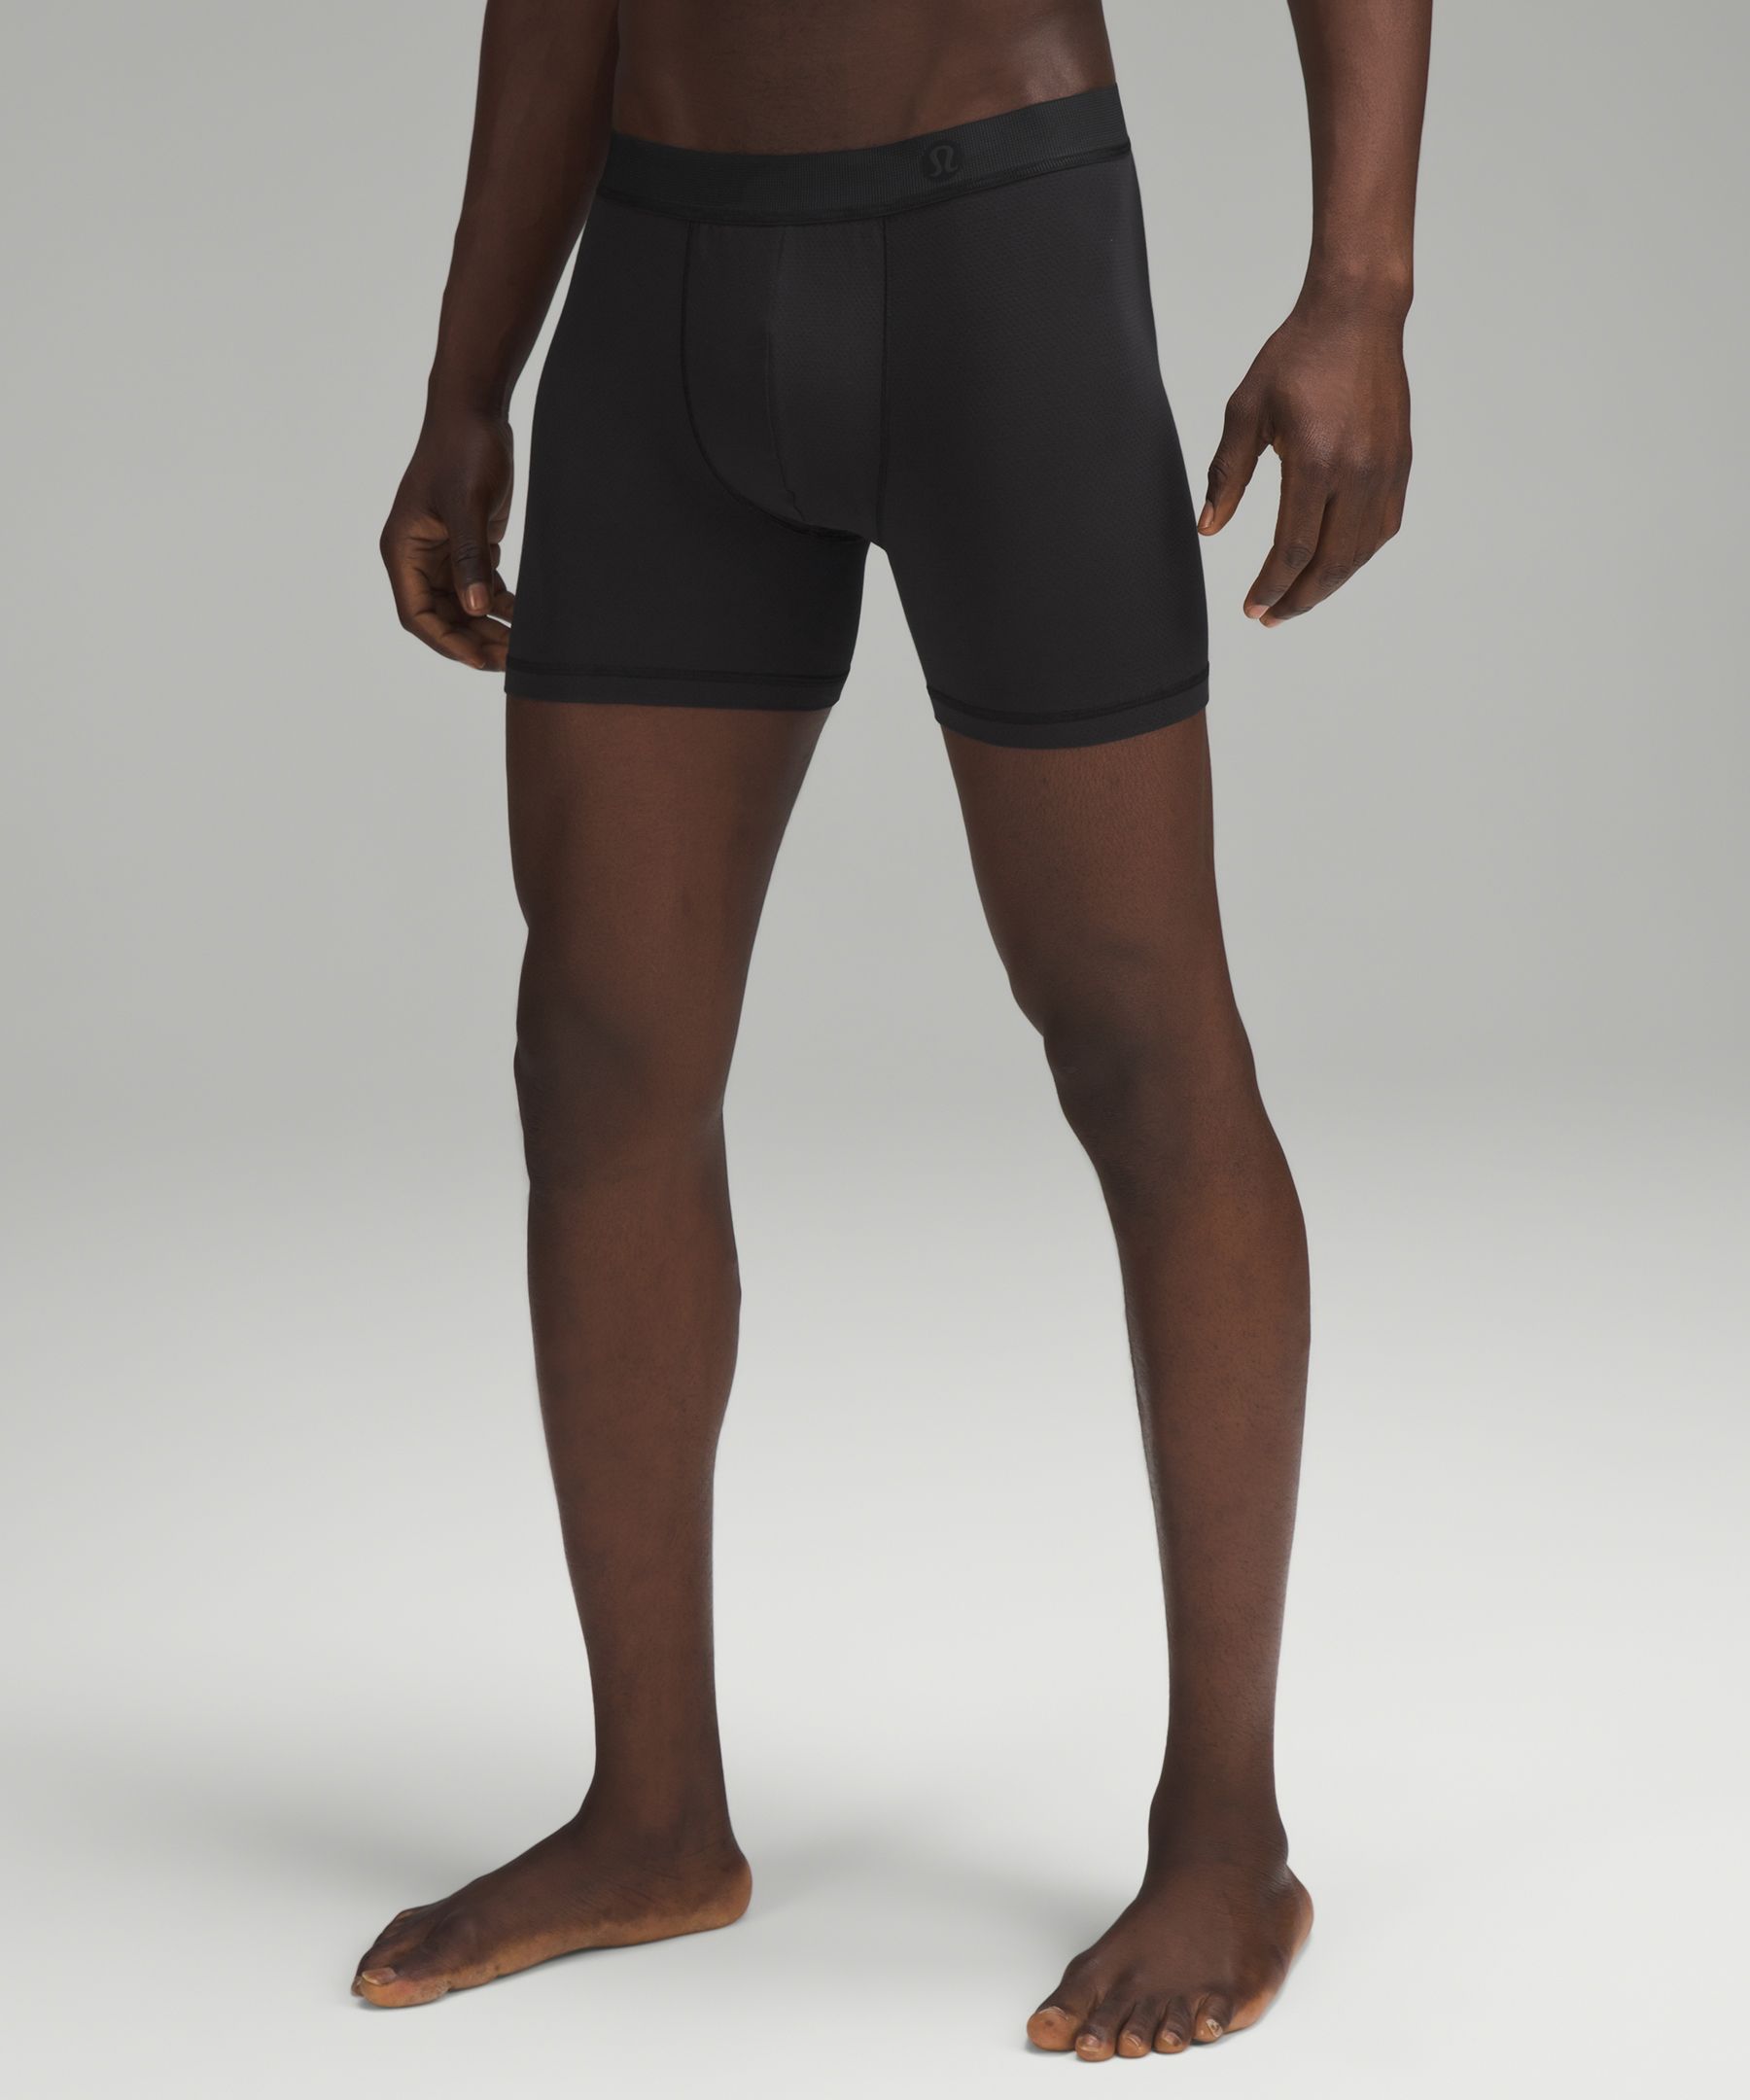 lululemon AIM Boxer - 5 - Heathered Core Medium Grey, Underwear